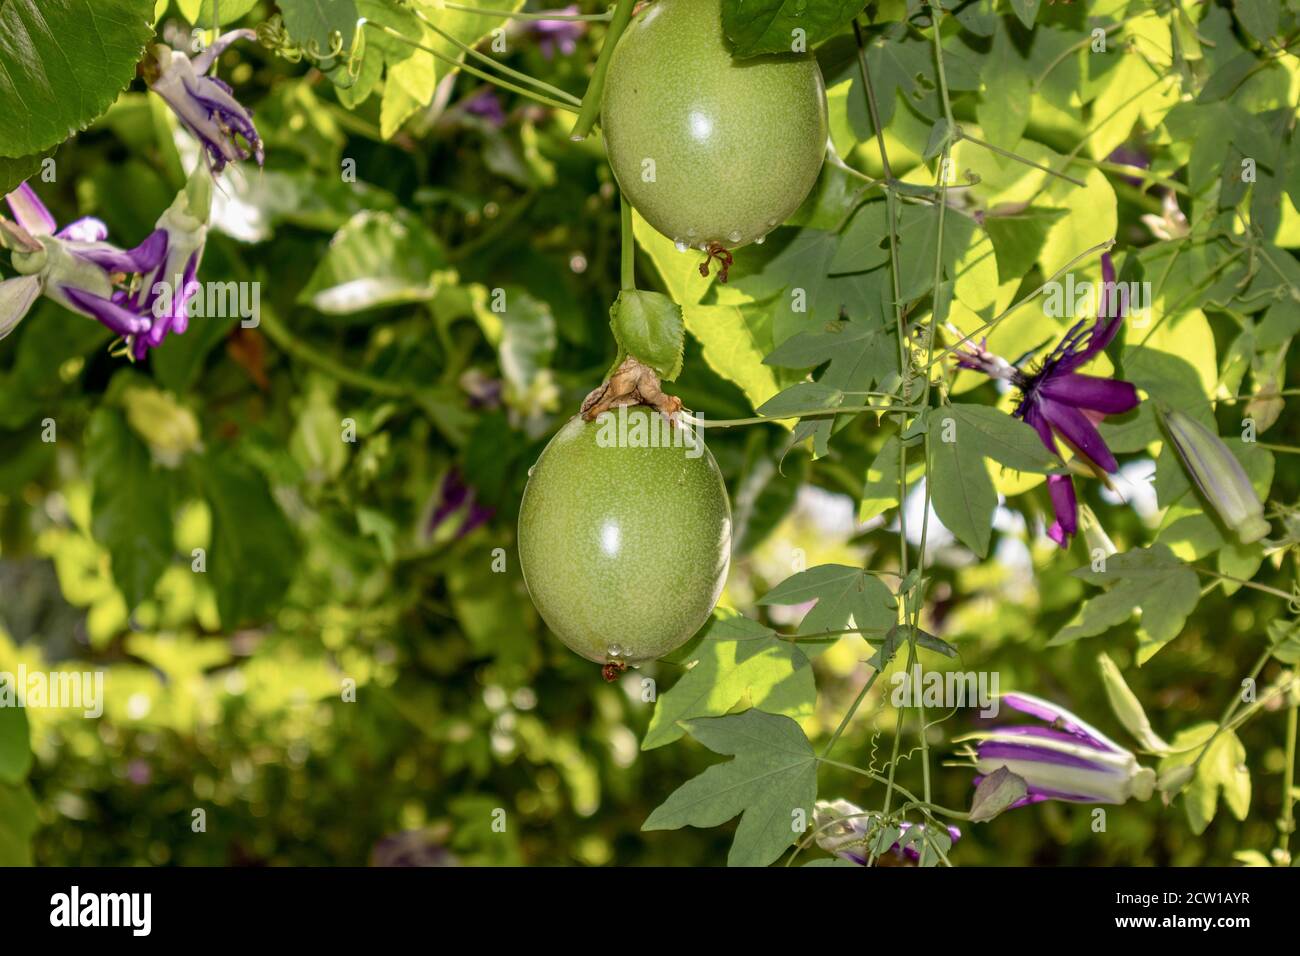 Passion fruit on the vine ripening Stock Photo